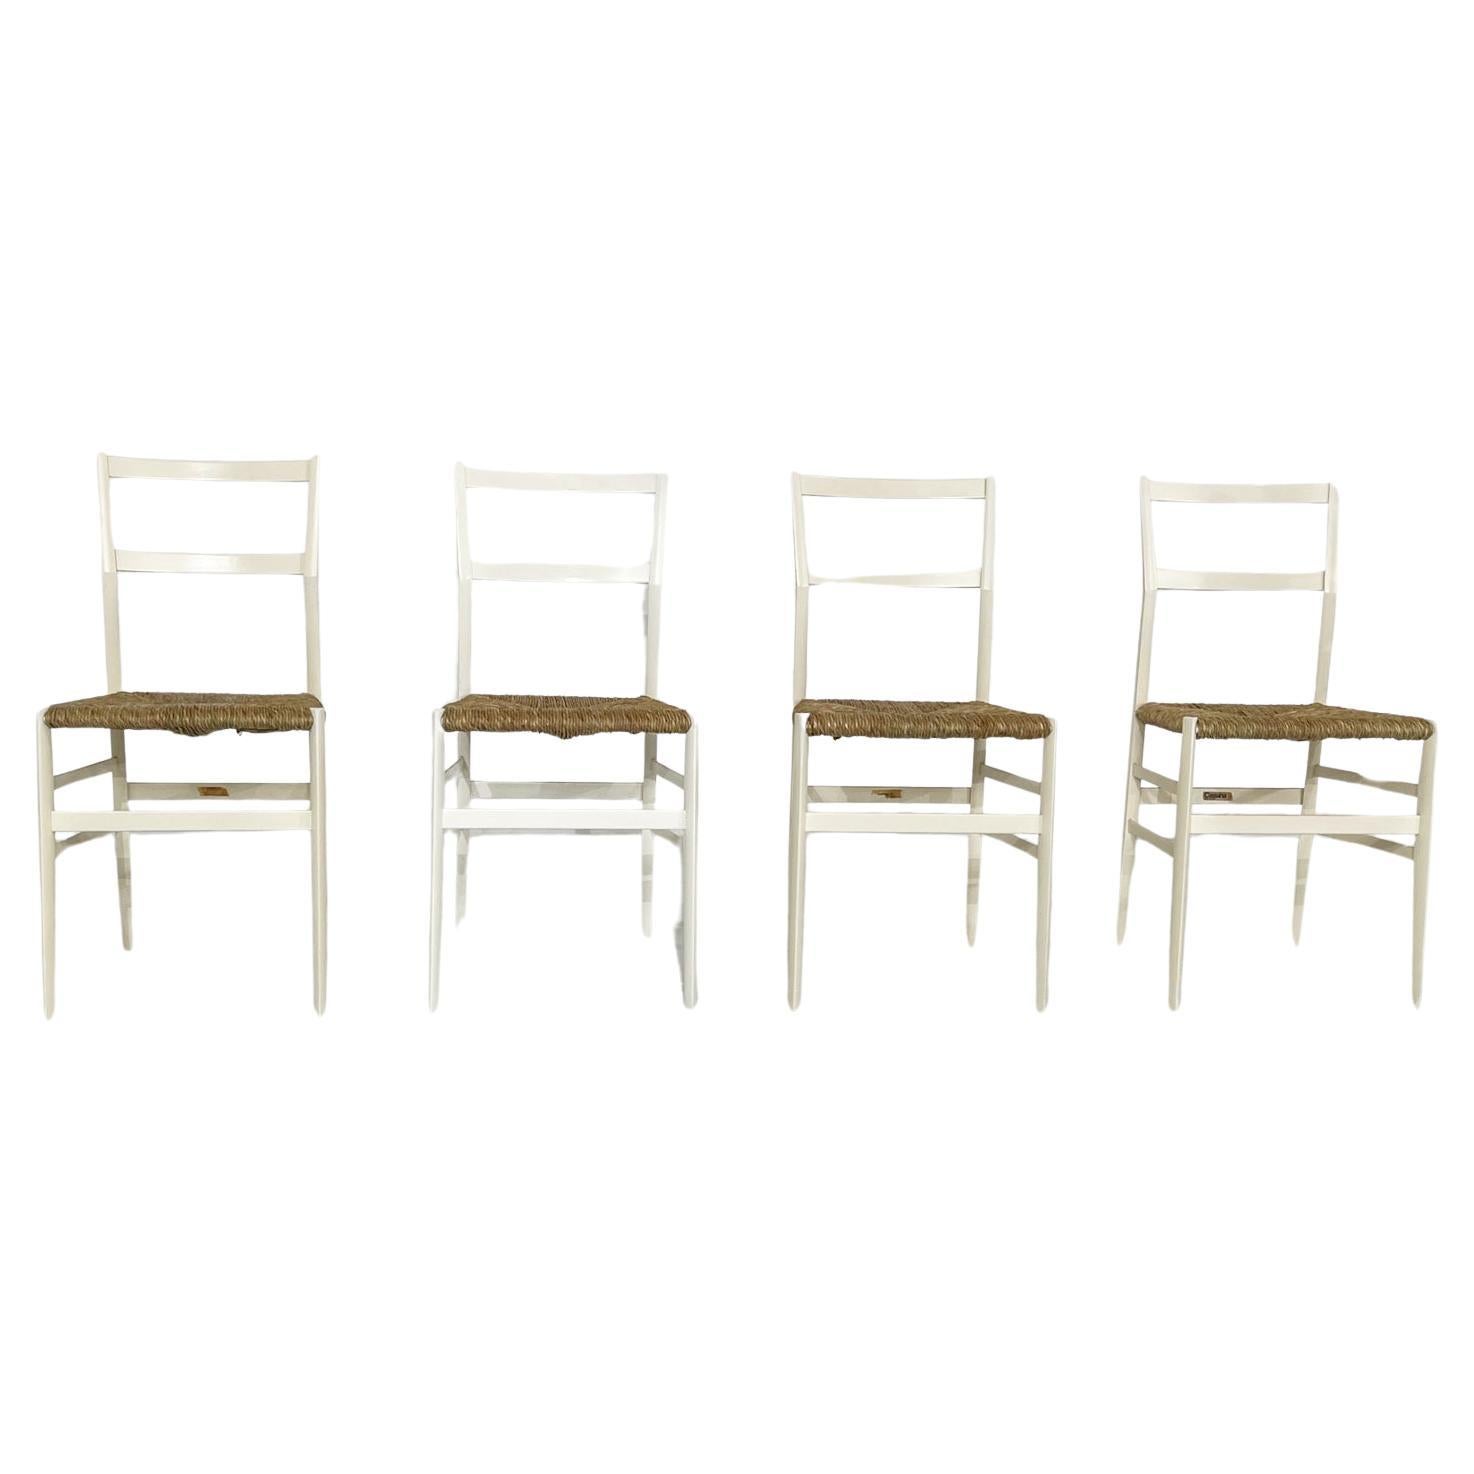 AMazing Set of 4 SuperLeggera chairs by Gio Ponti for Cassina - 1950